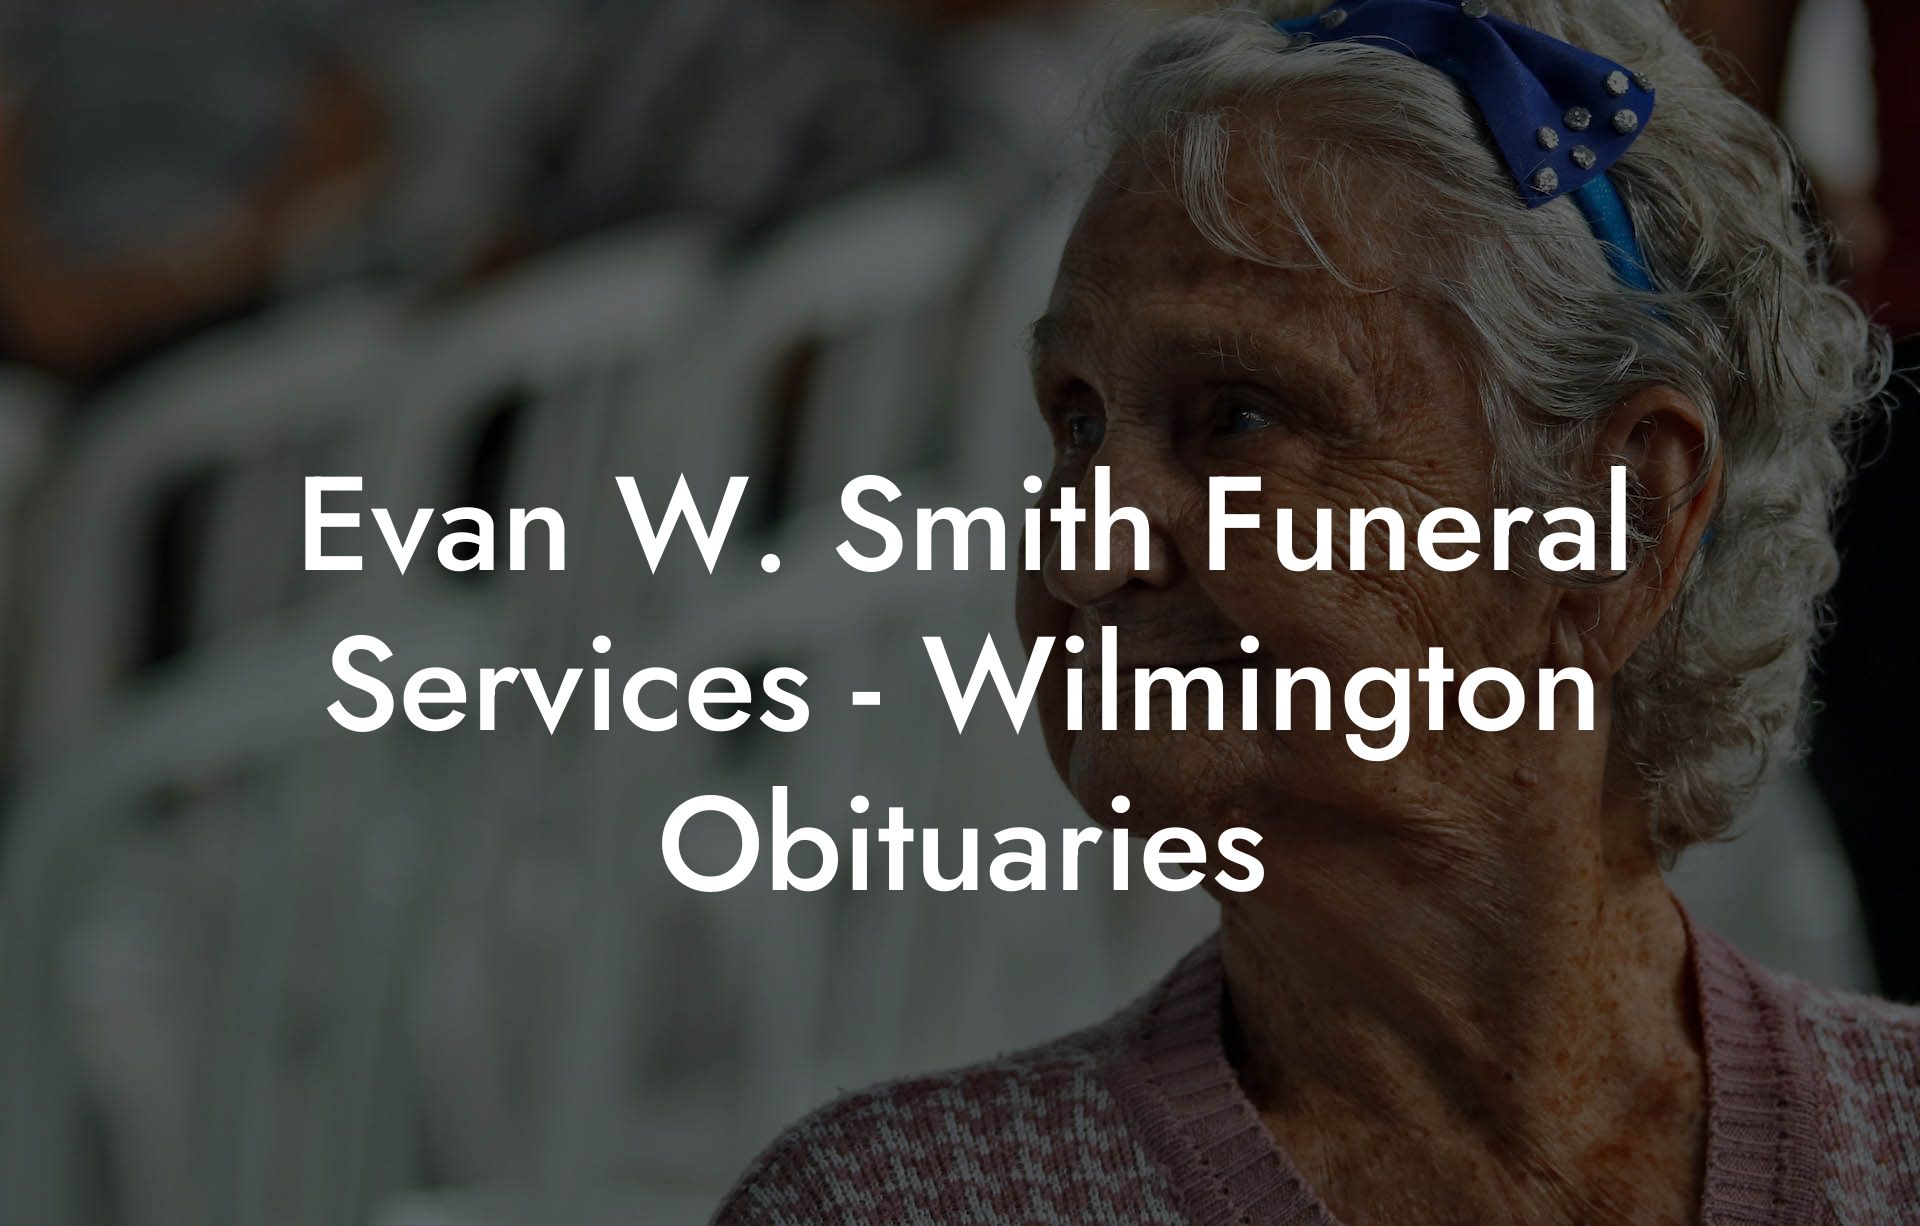 Evan W. Smith Funeral Services - Wilmington Obituaries